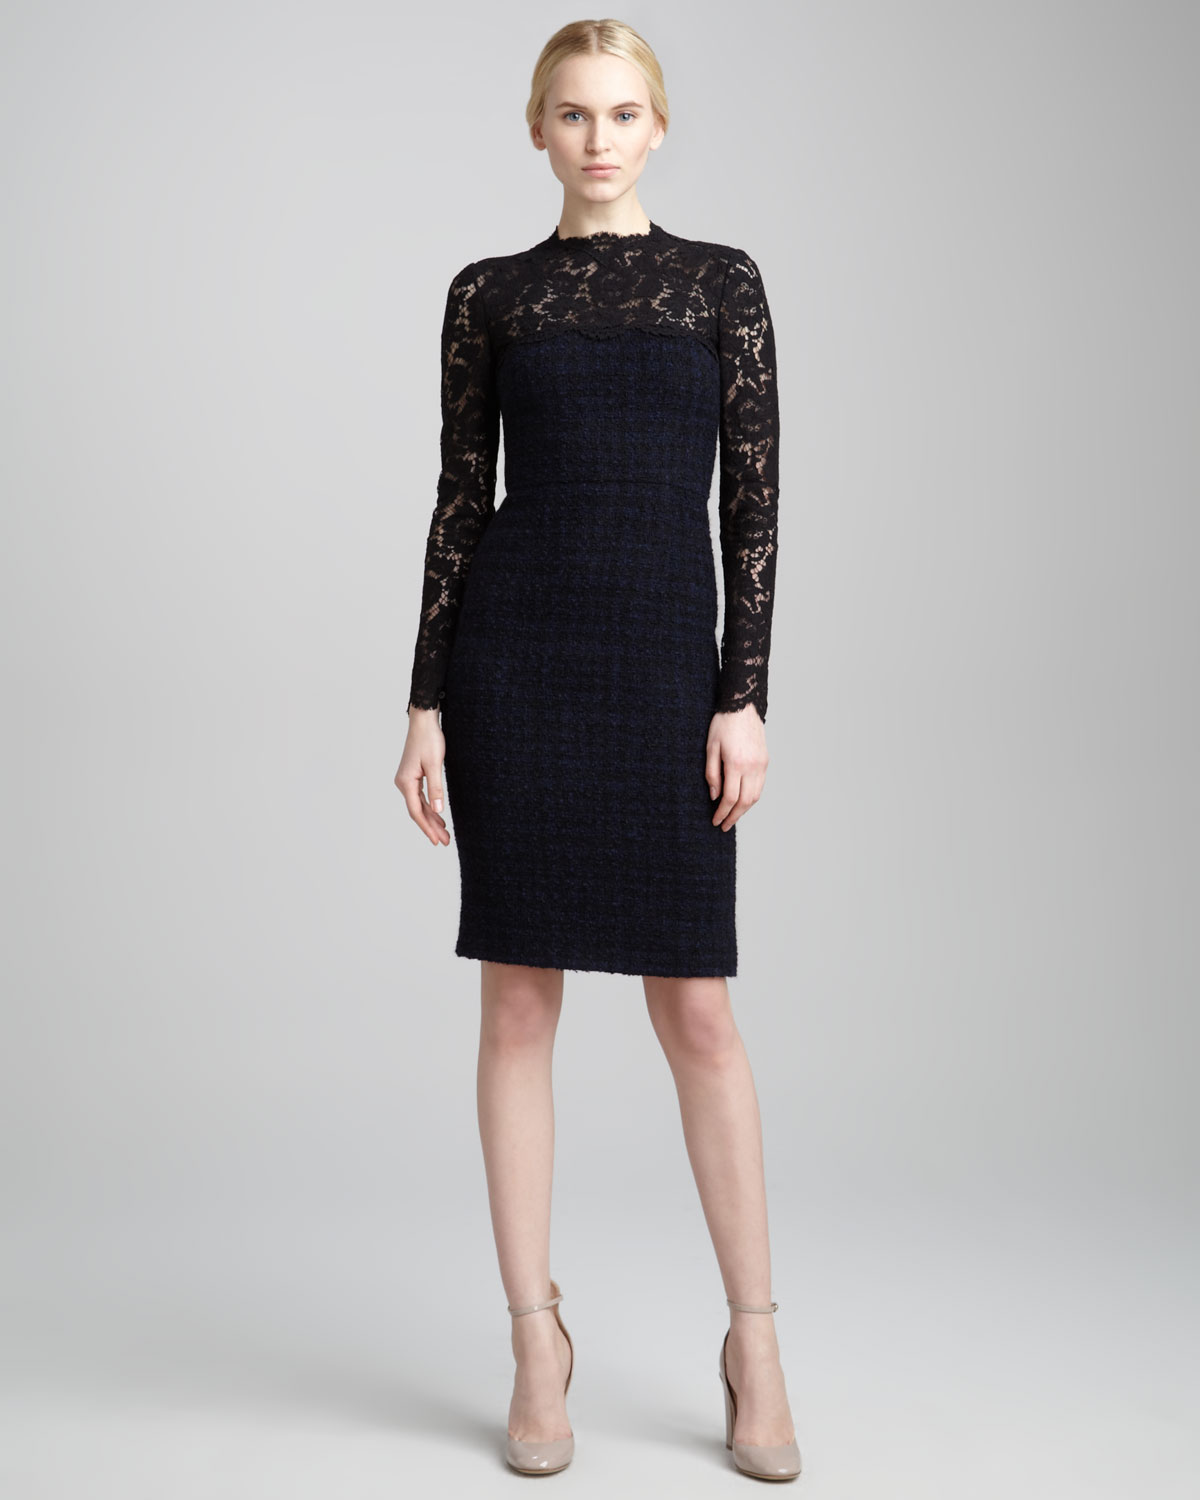 Lyst - Valentino Laceyoke Tweed Boucle Dress in Black